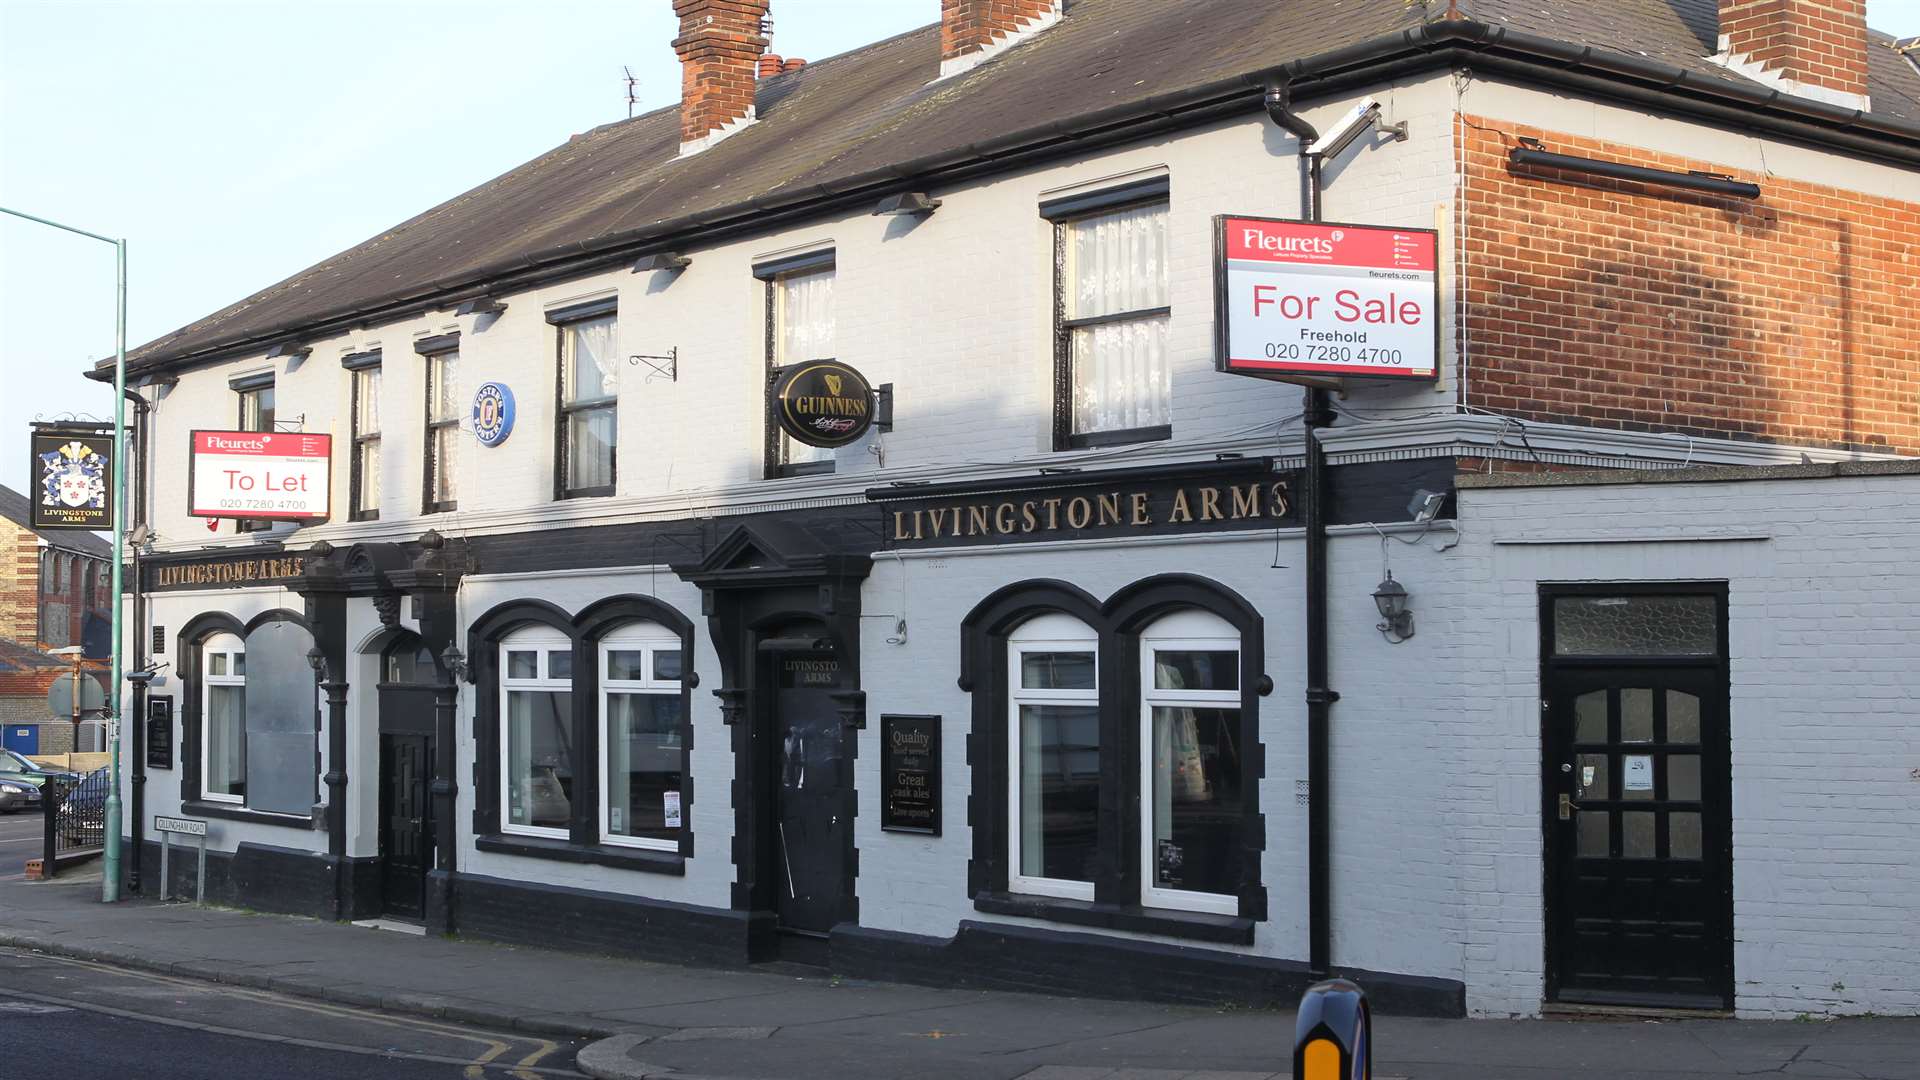 The Livingstone Arms pub, Gillingham